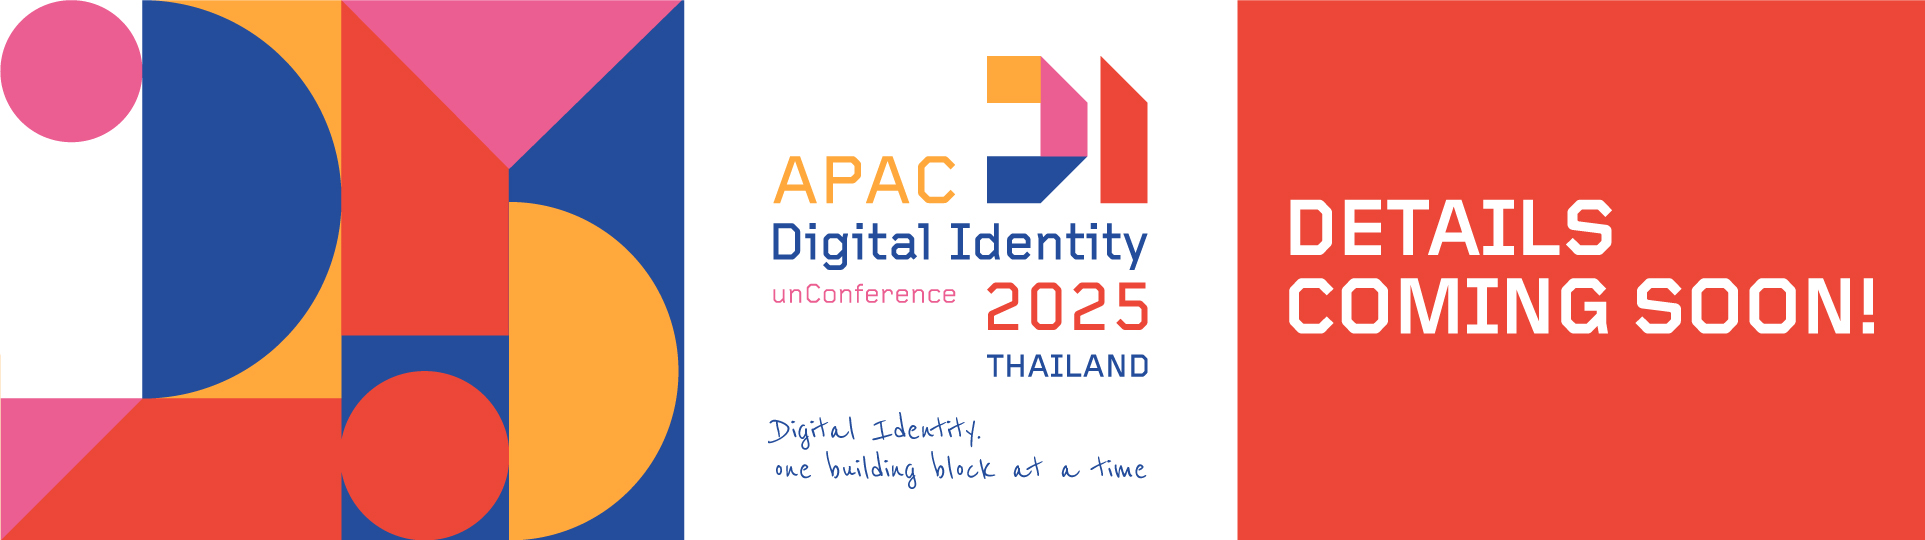 APAC Digital Identity unConference 2024